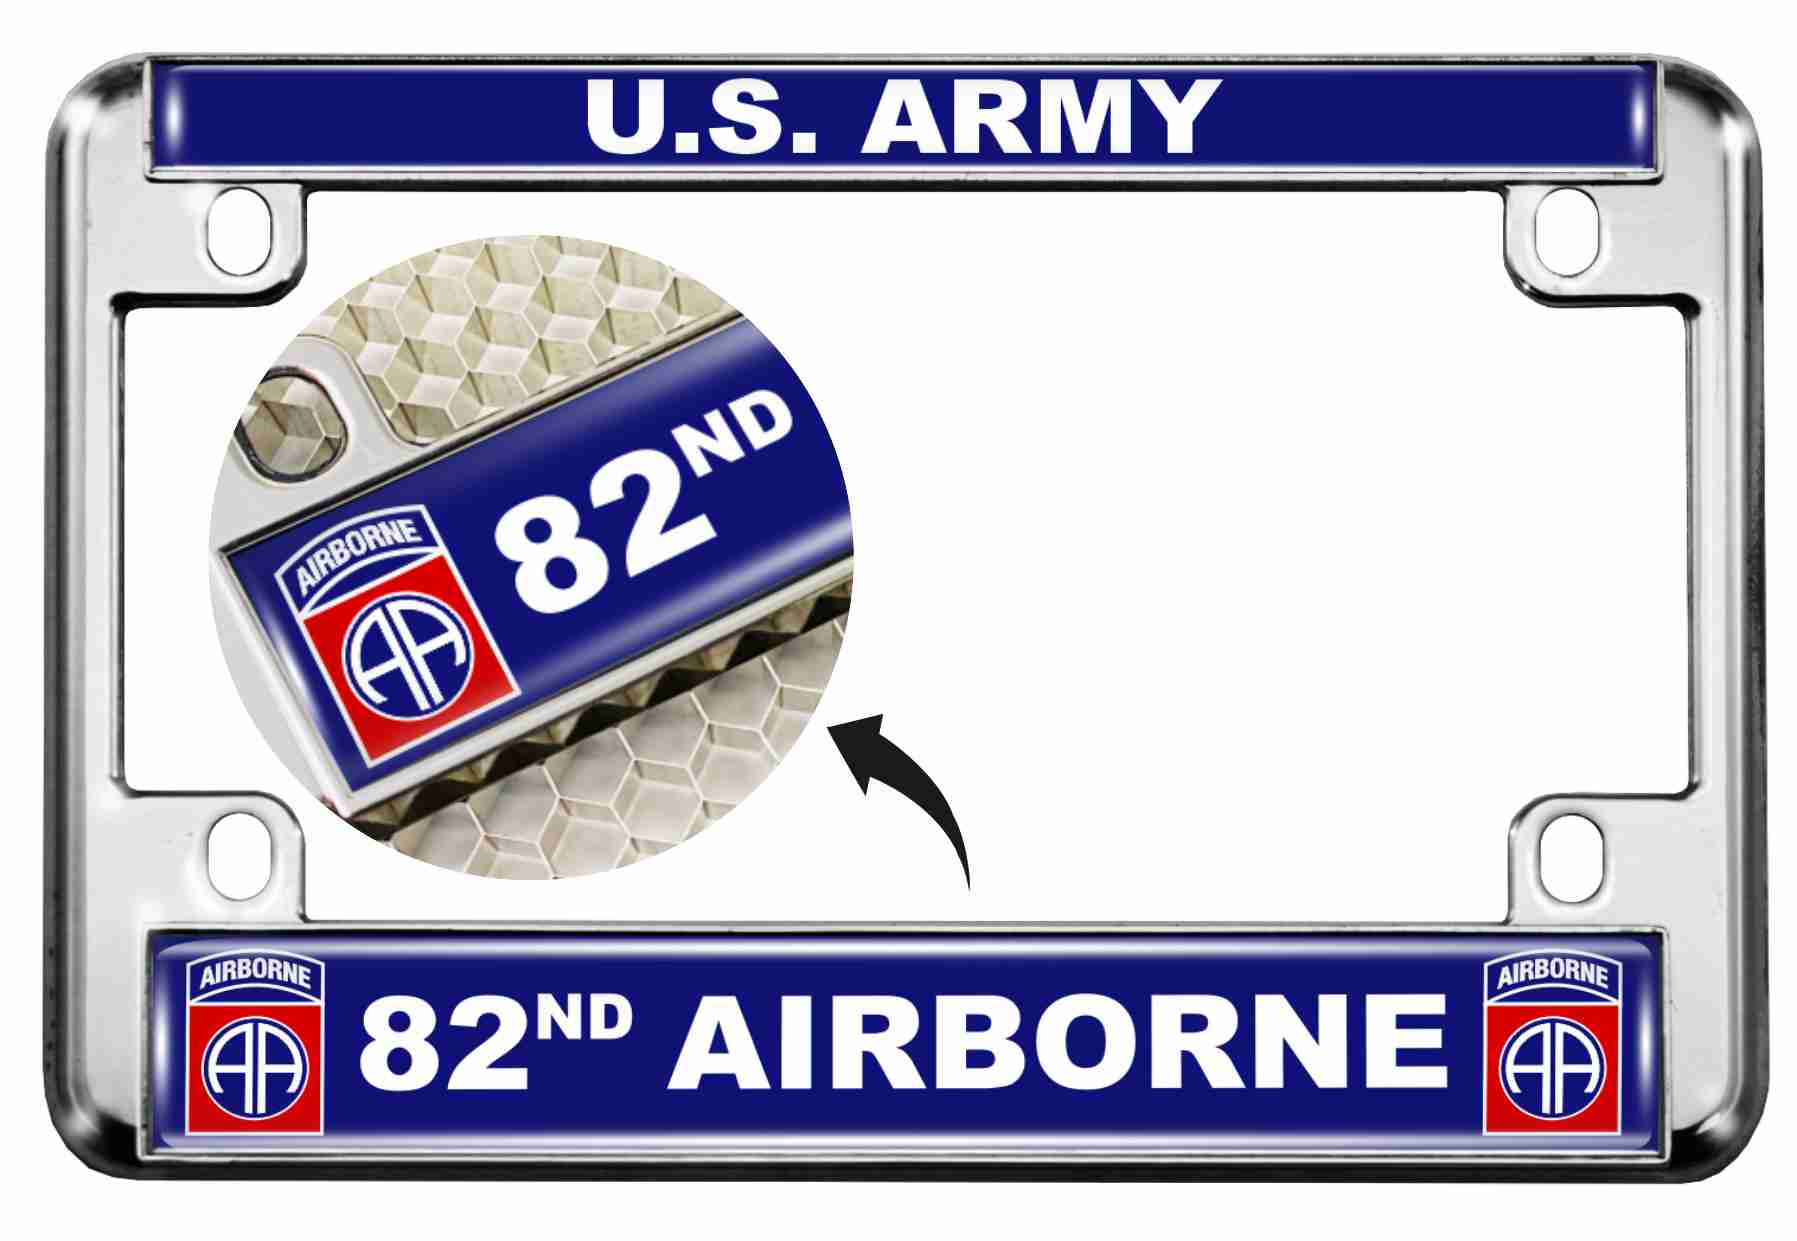 U.S. Army 82nd Airborne - Motorcycle Metal License Plate Frame